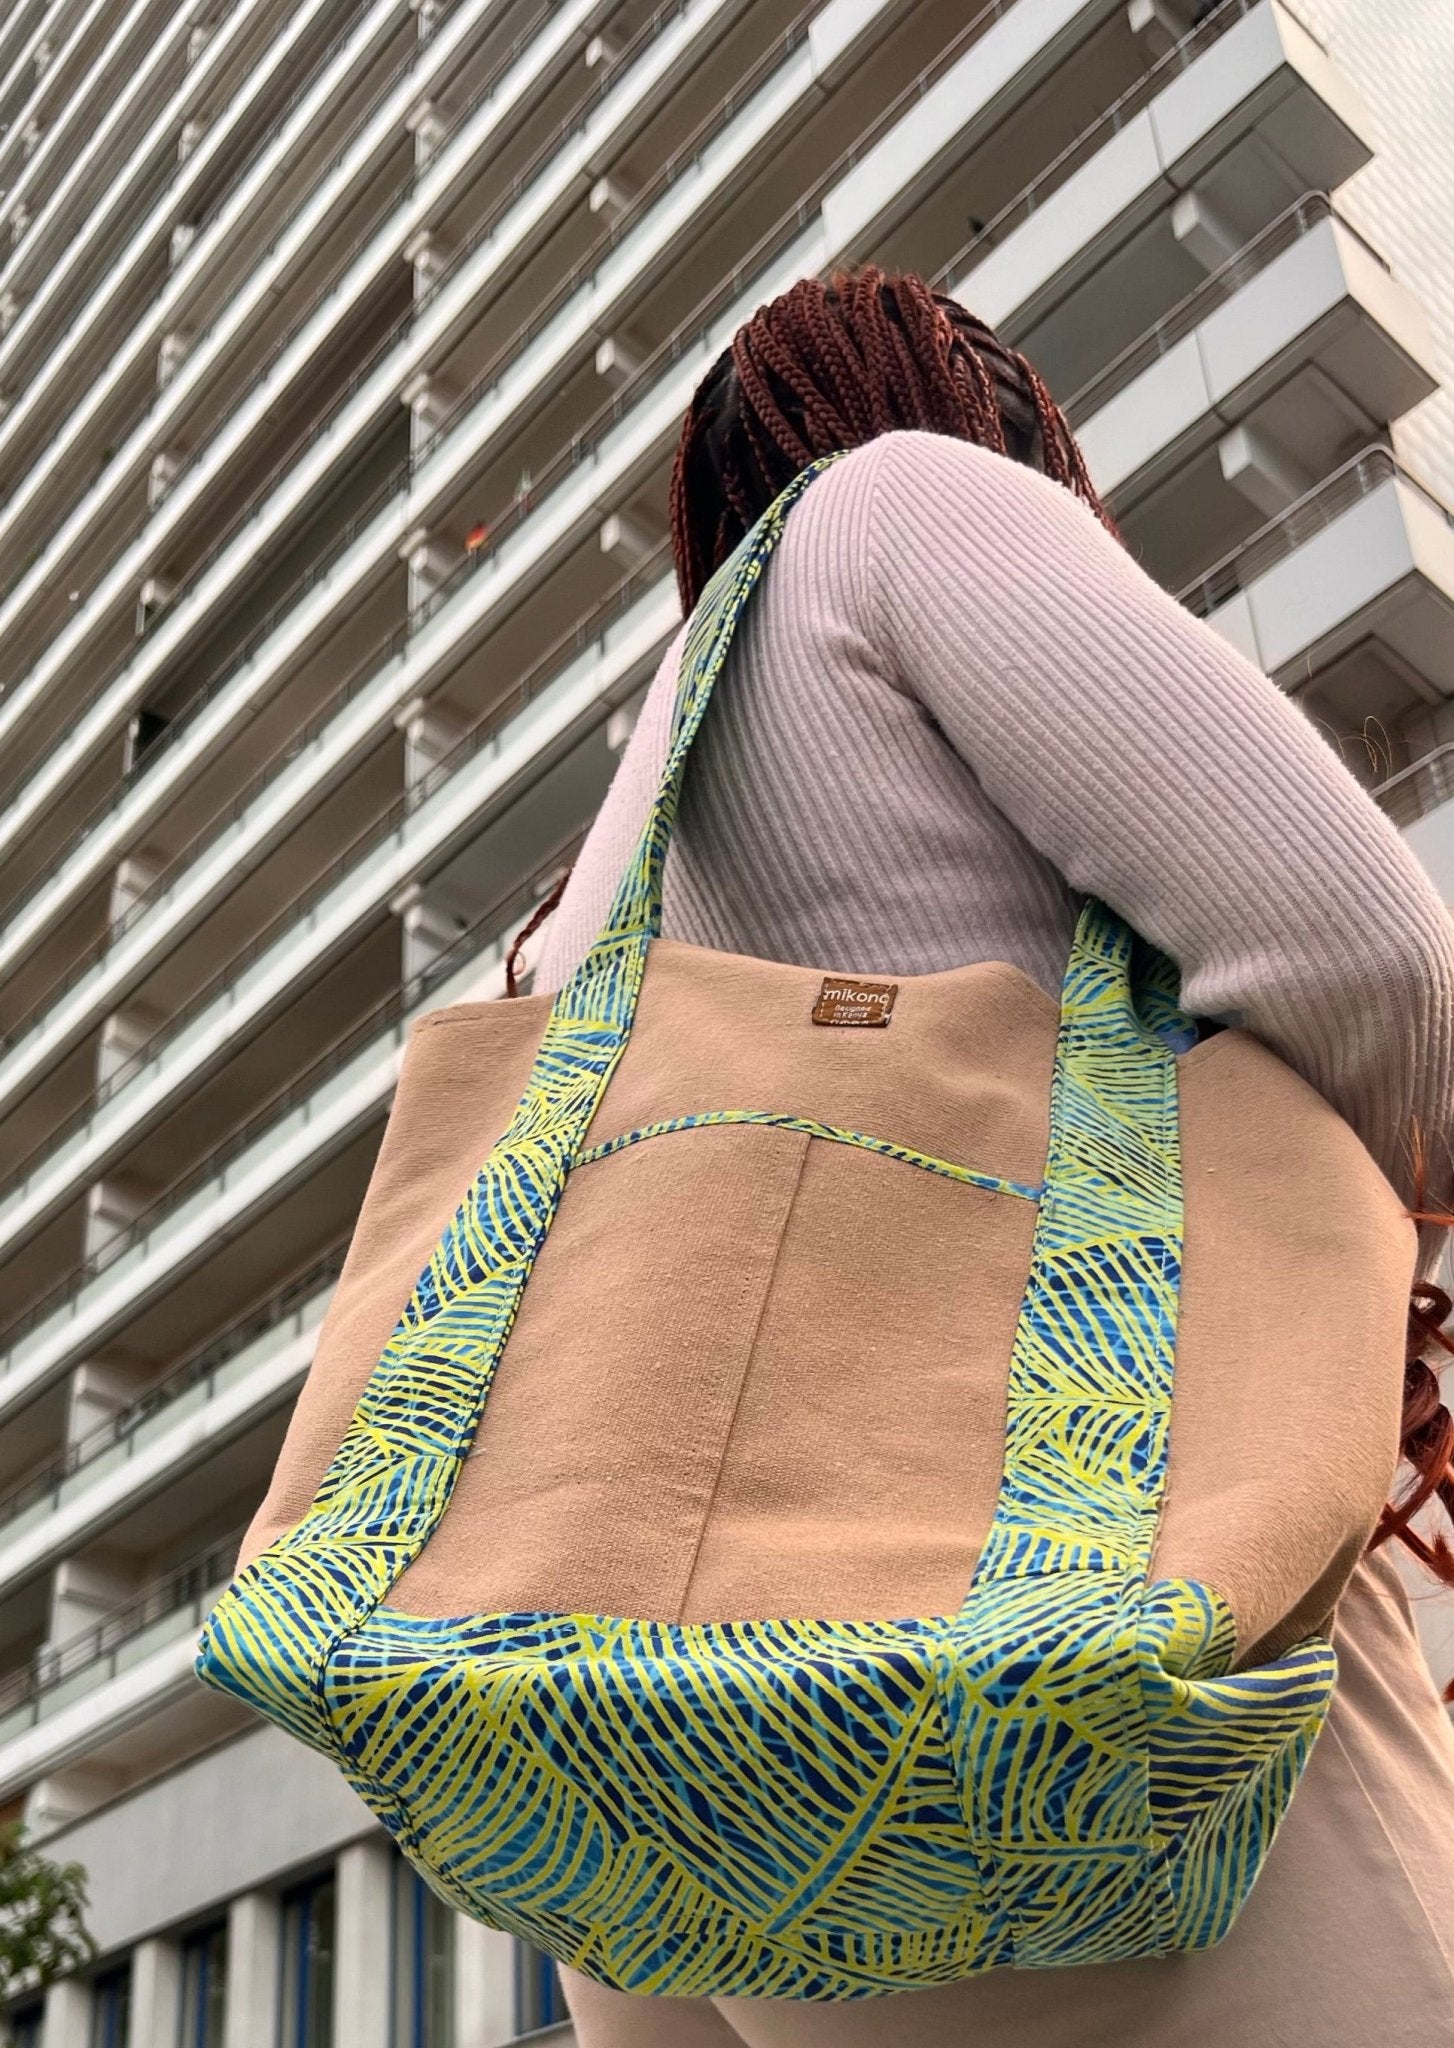 Tote-Bag ‚Splash Splash‘ - mikono.africa Jacken aus Kenia bunte Bomberjacke Partyjacke faire sozial nachhaltig designed in Kenia